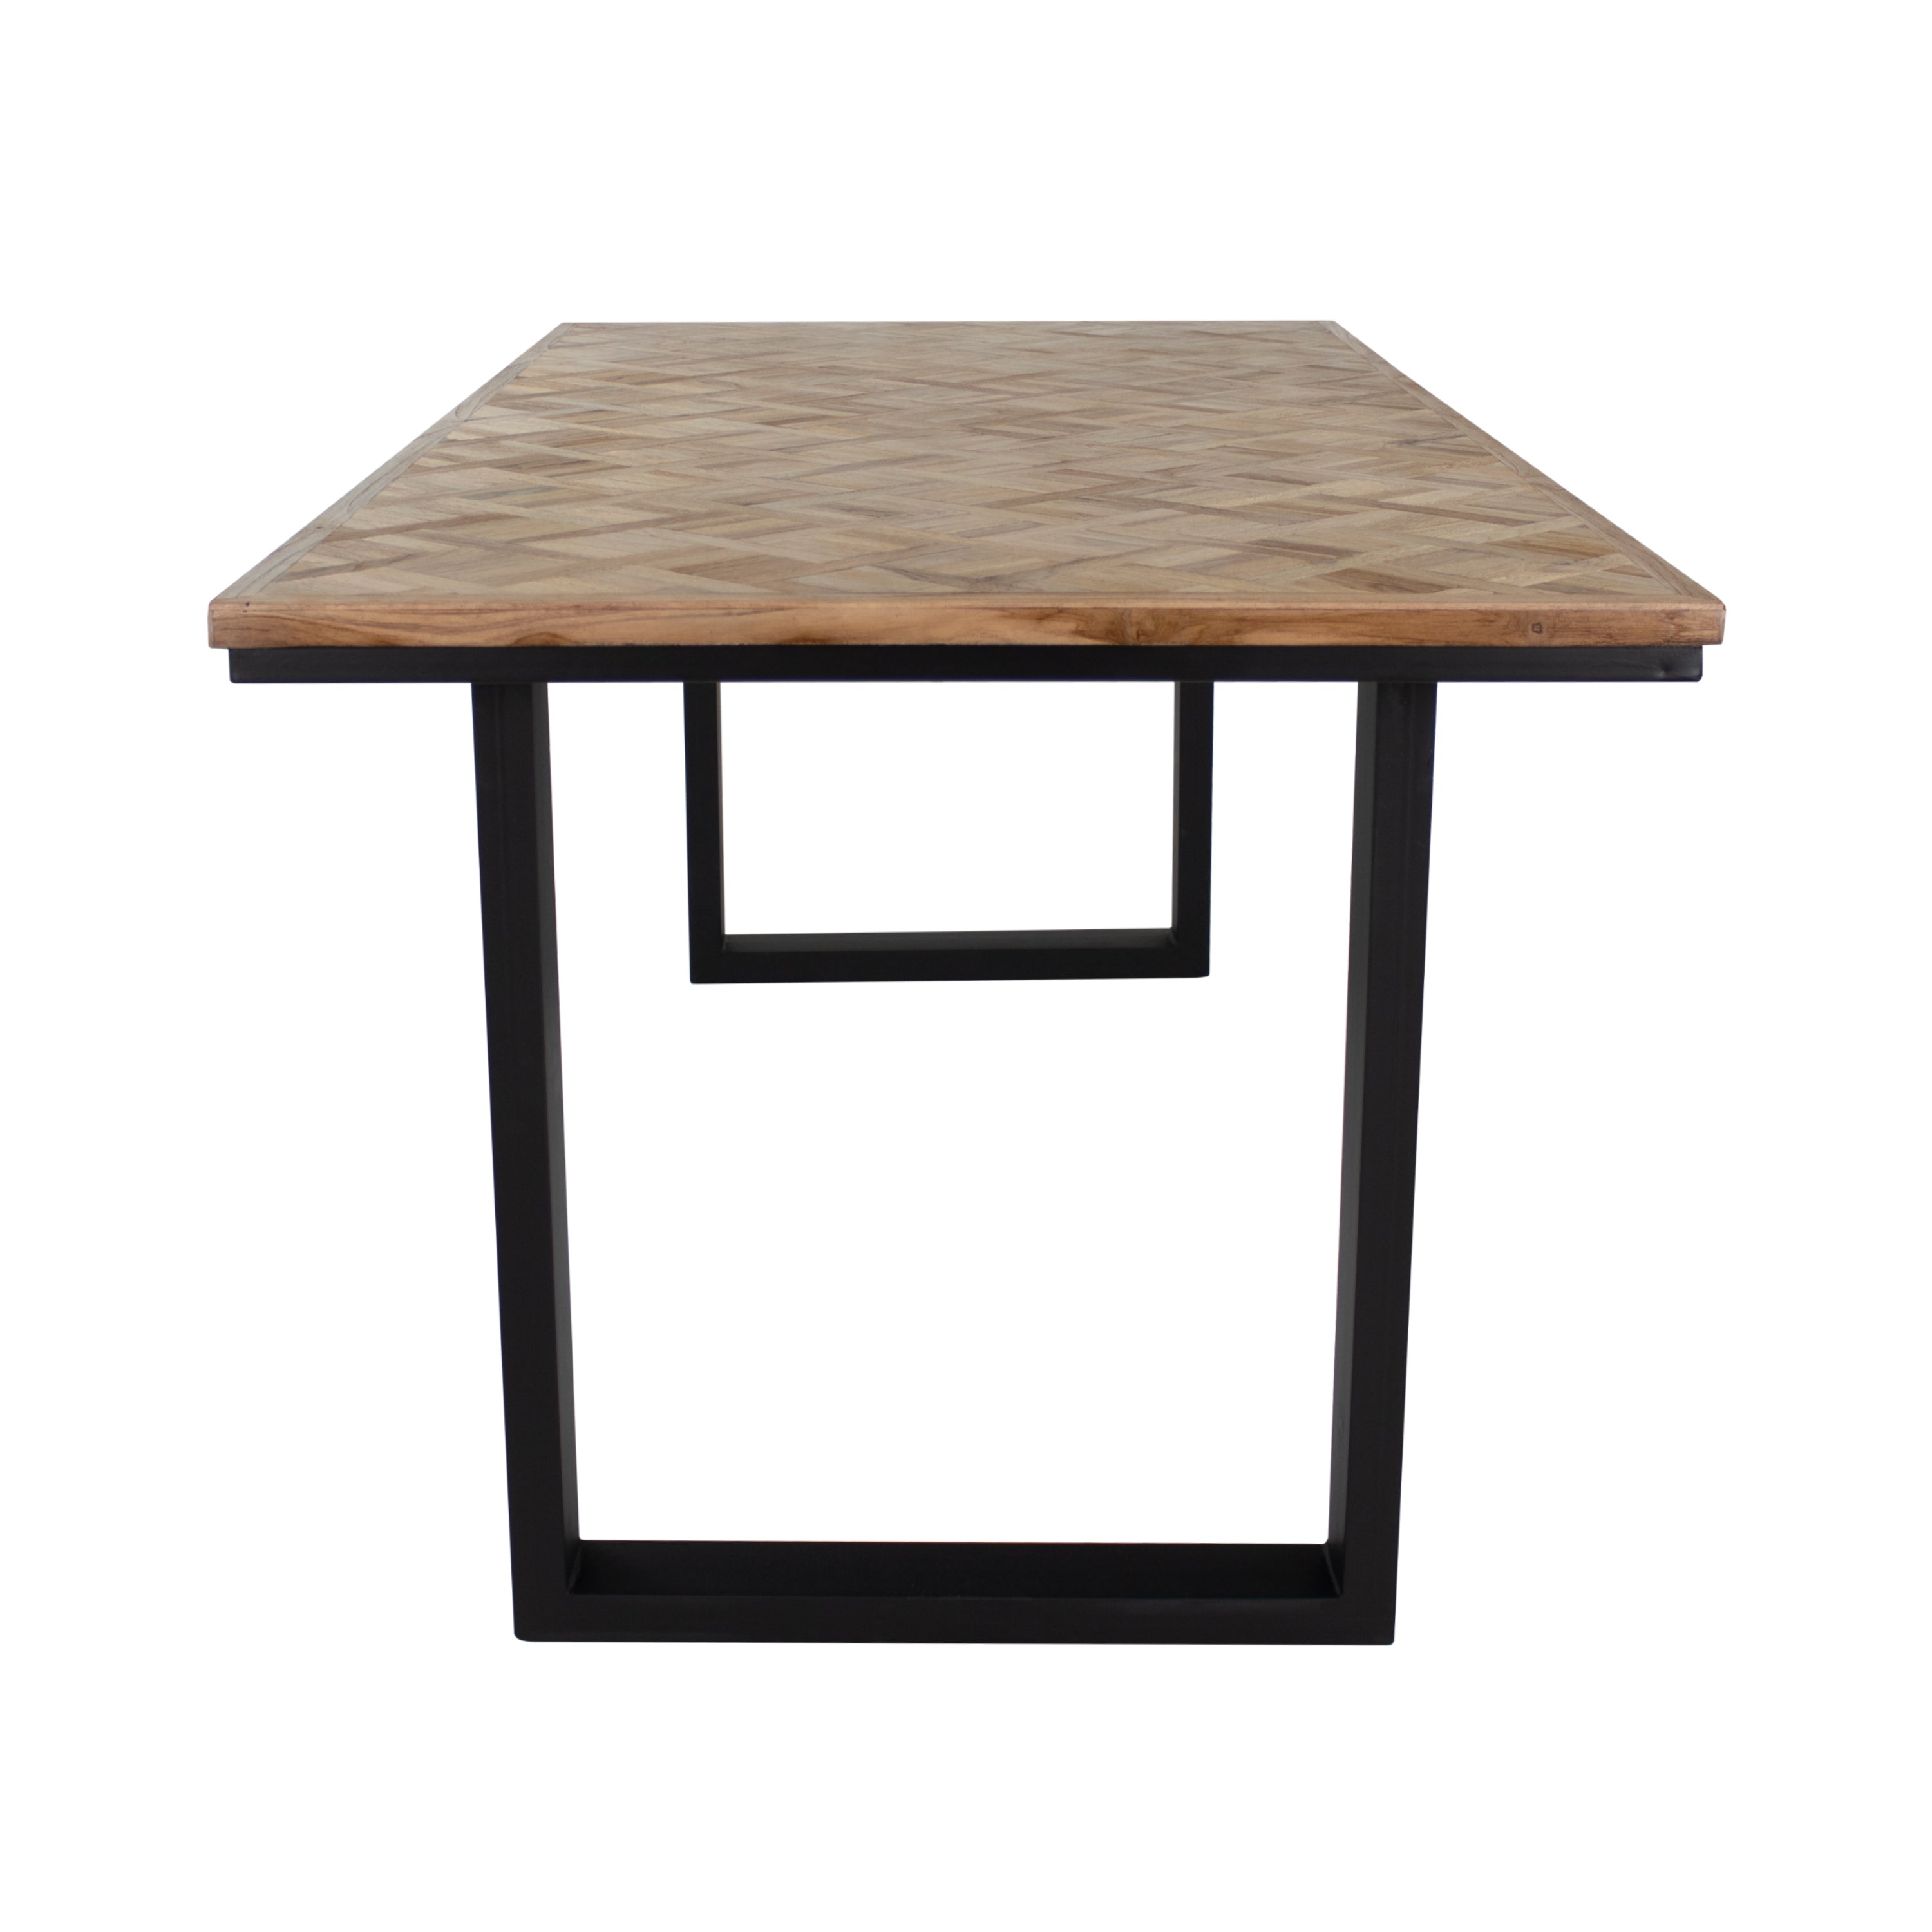 Kick dining table Jesper - 180cm